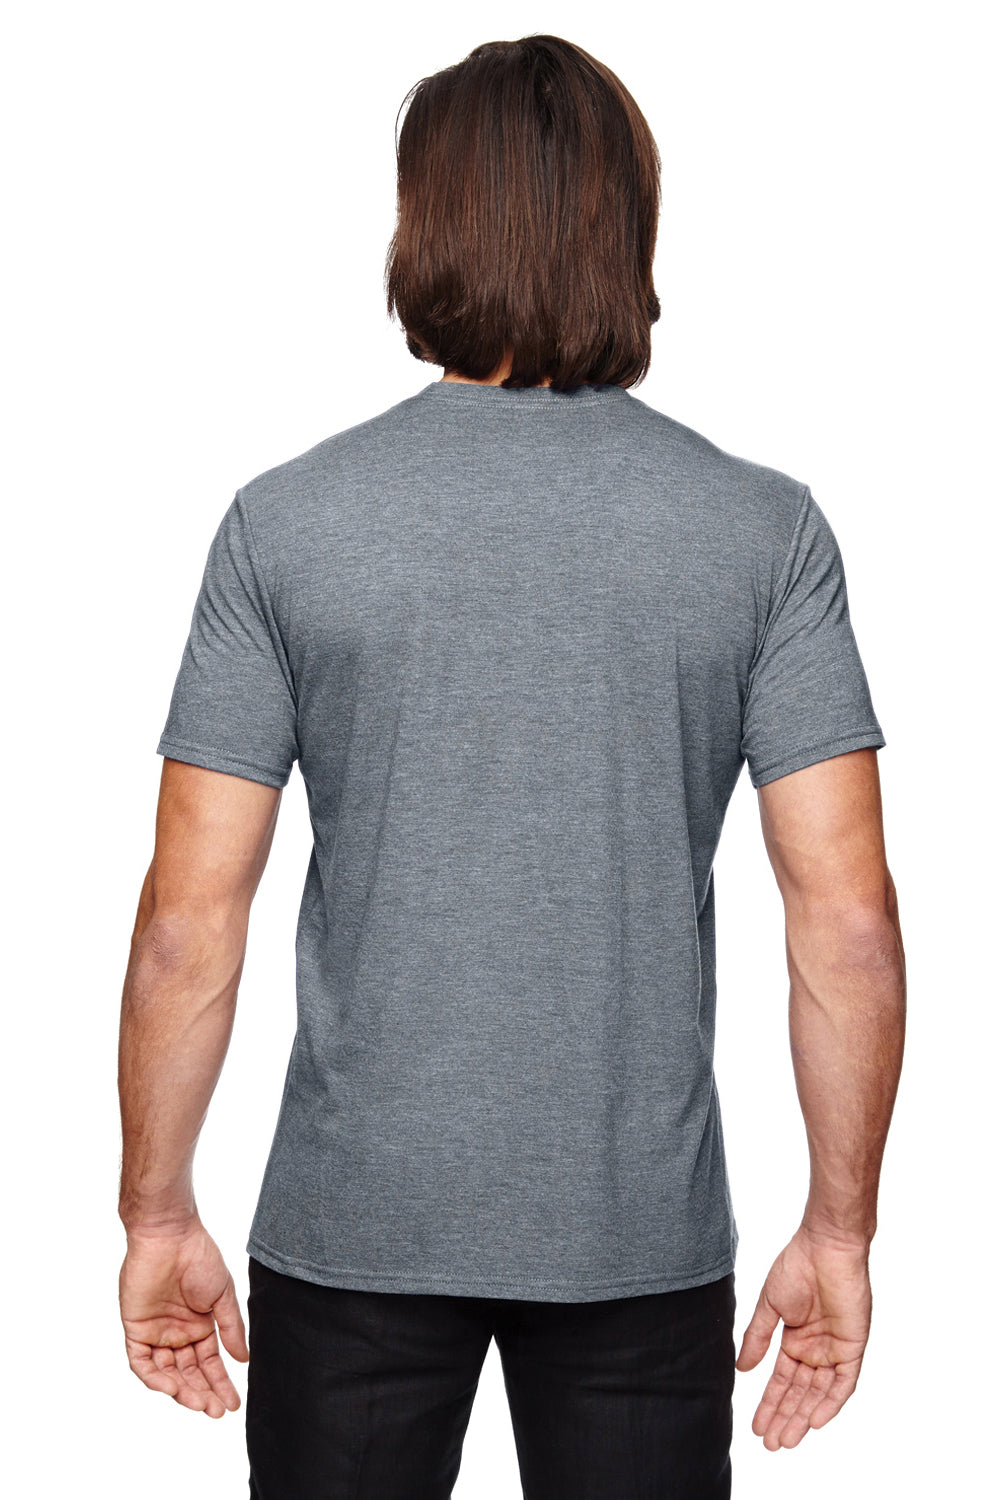 Anvil 6750 Mens Short Sleeve Crewneck T-Shirt Heather Graphite Grey Back